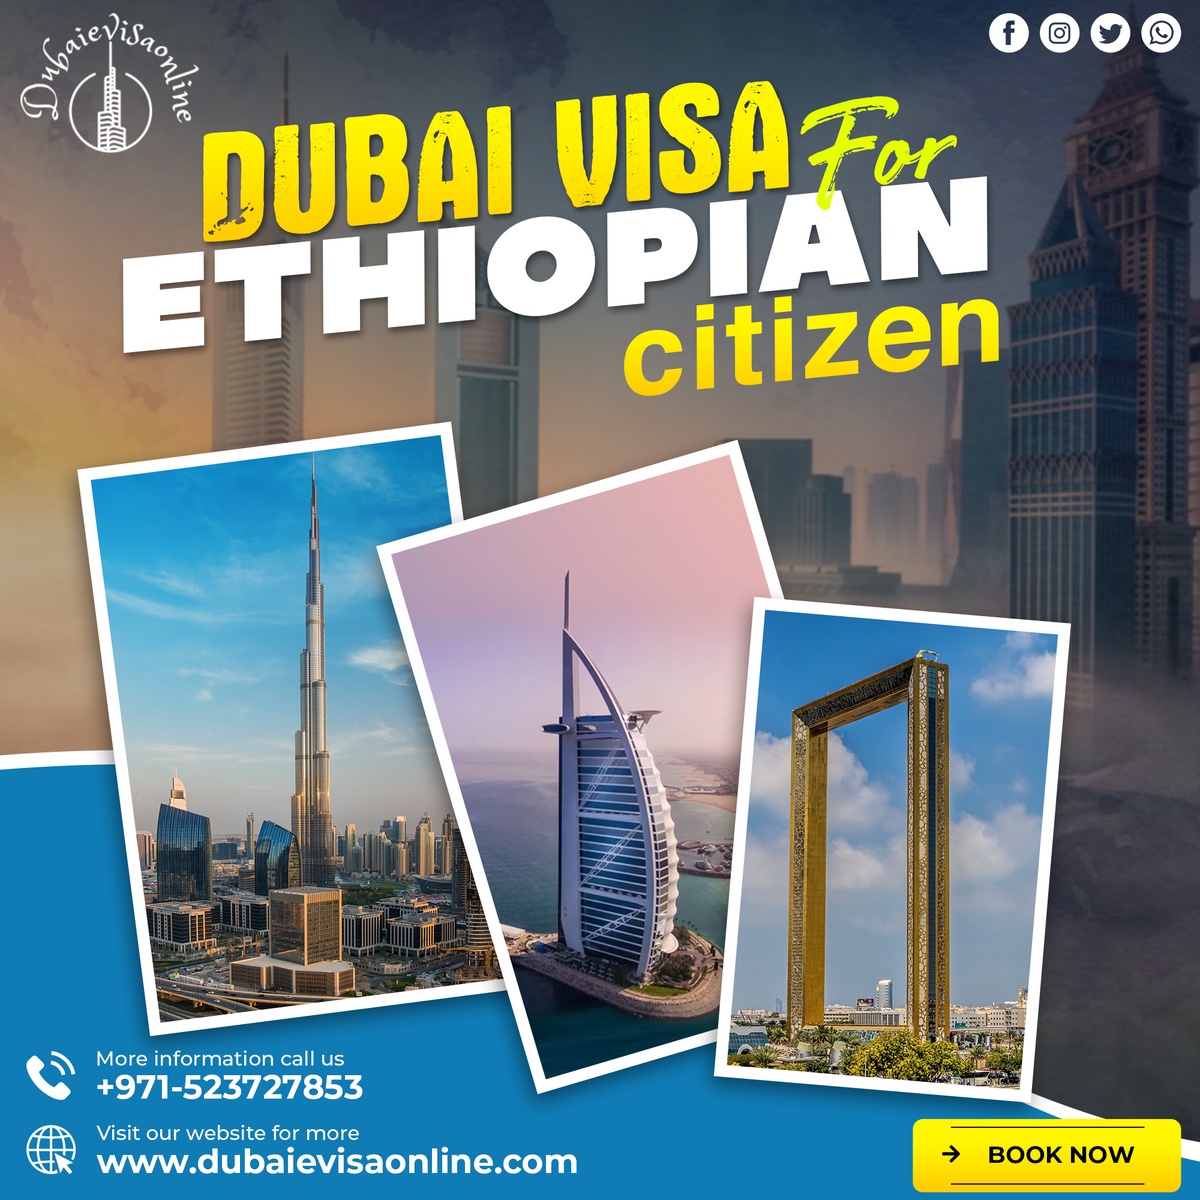 Dubai visa for Ethiopian Citizen